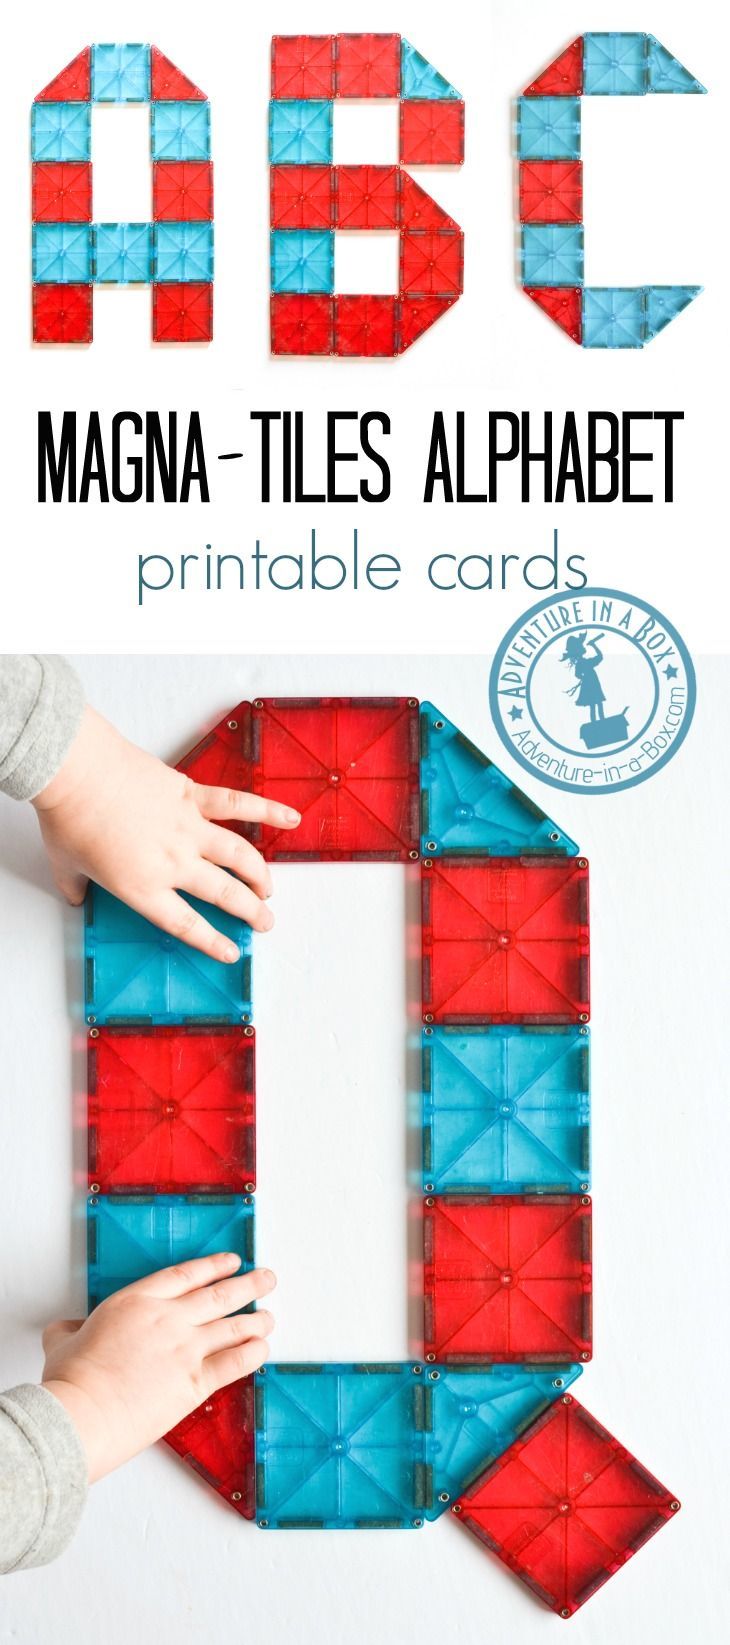 Magna-tiles Alphabet Printable Cards: Build the alphabet with magnetic tiles! Free printable cards of 26 letter designs for kids